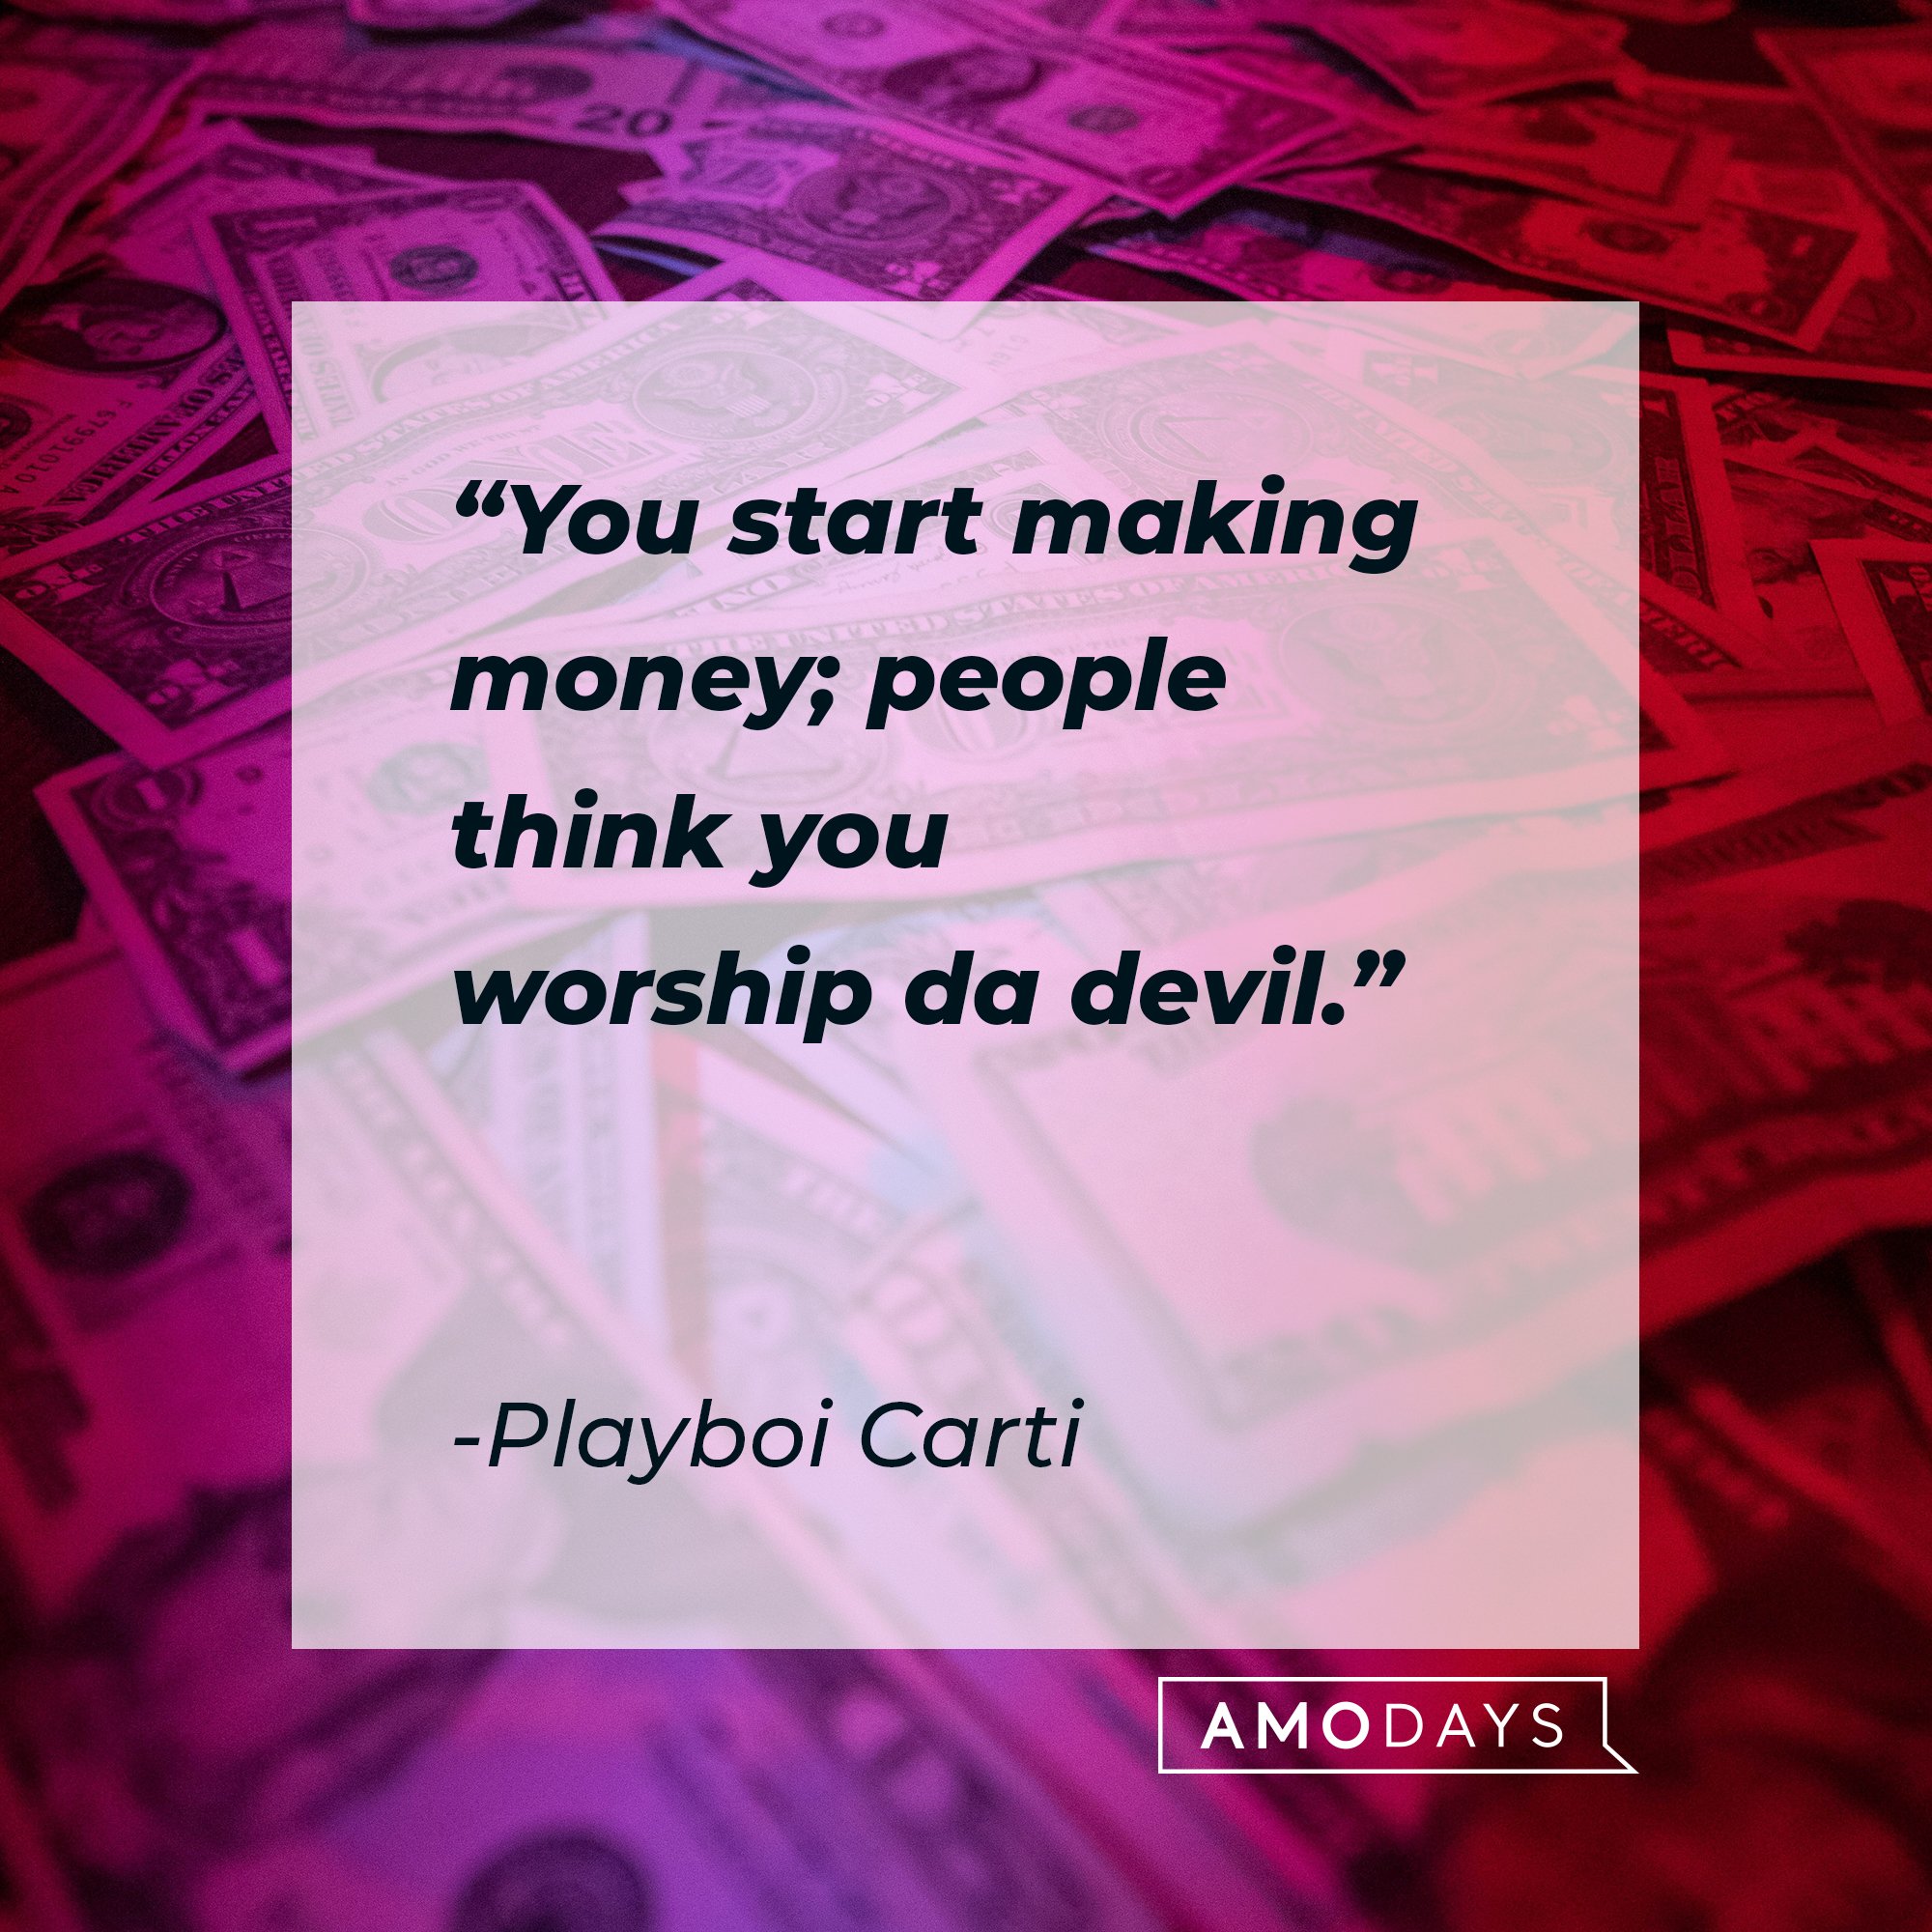 Playboi Carti ‘s quote: "You start making money; people think you worship da devil." | Image: AmoDays